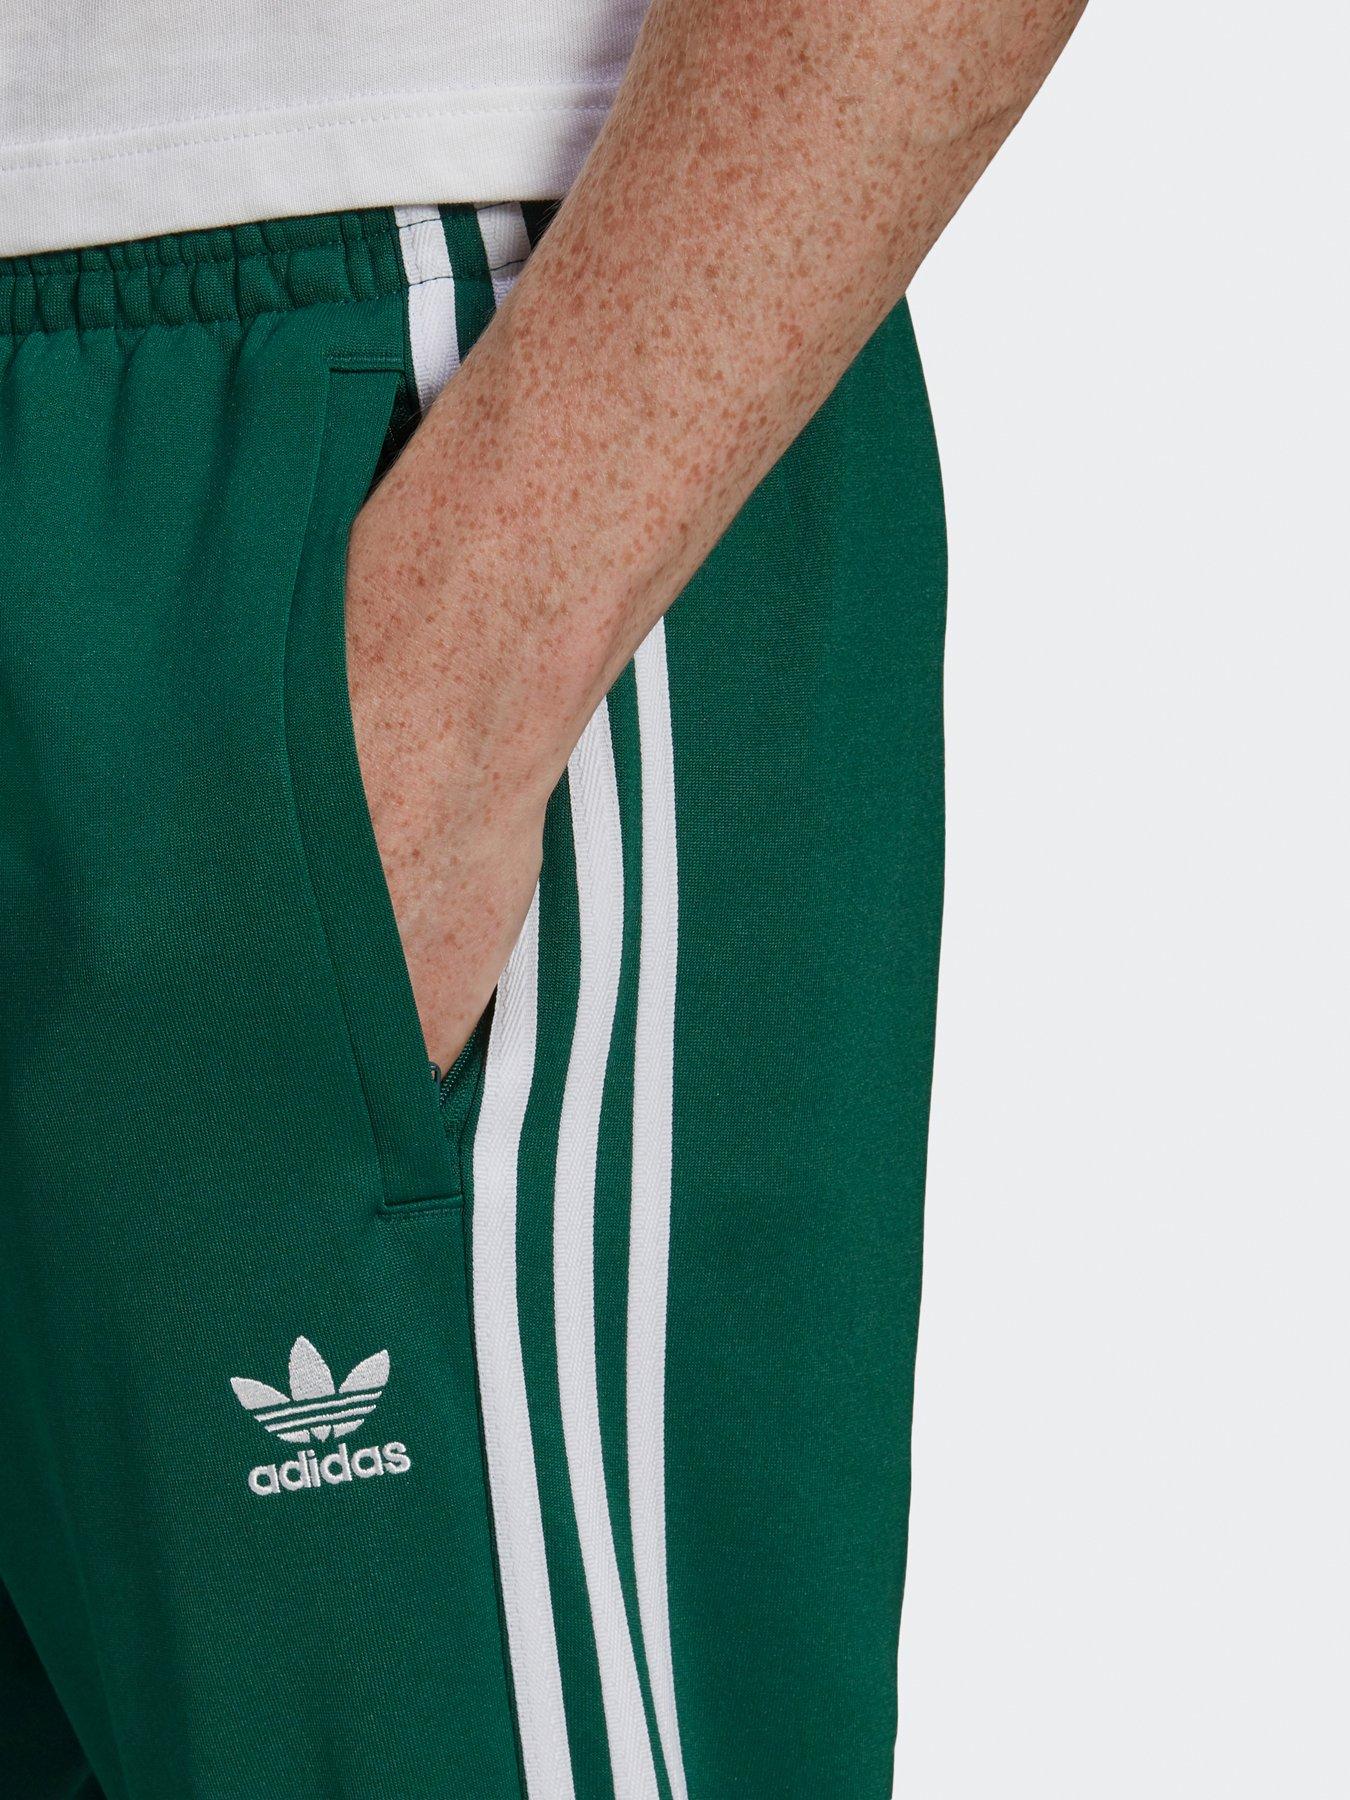 adidas PRIMEBLUE SST TRACK PANTS - Green